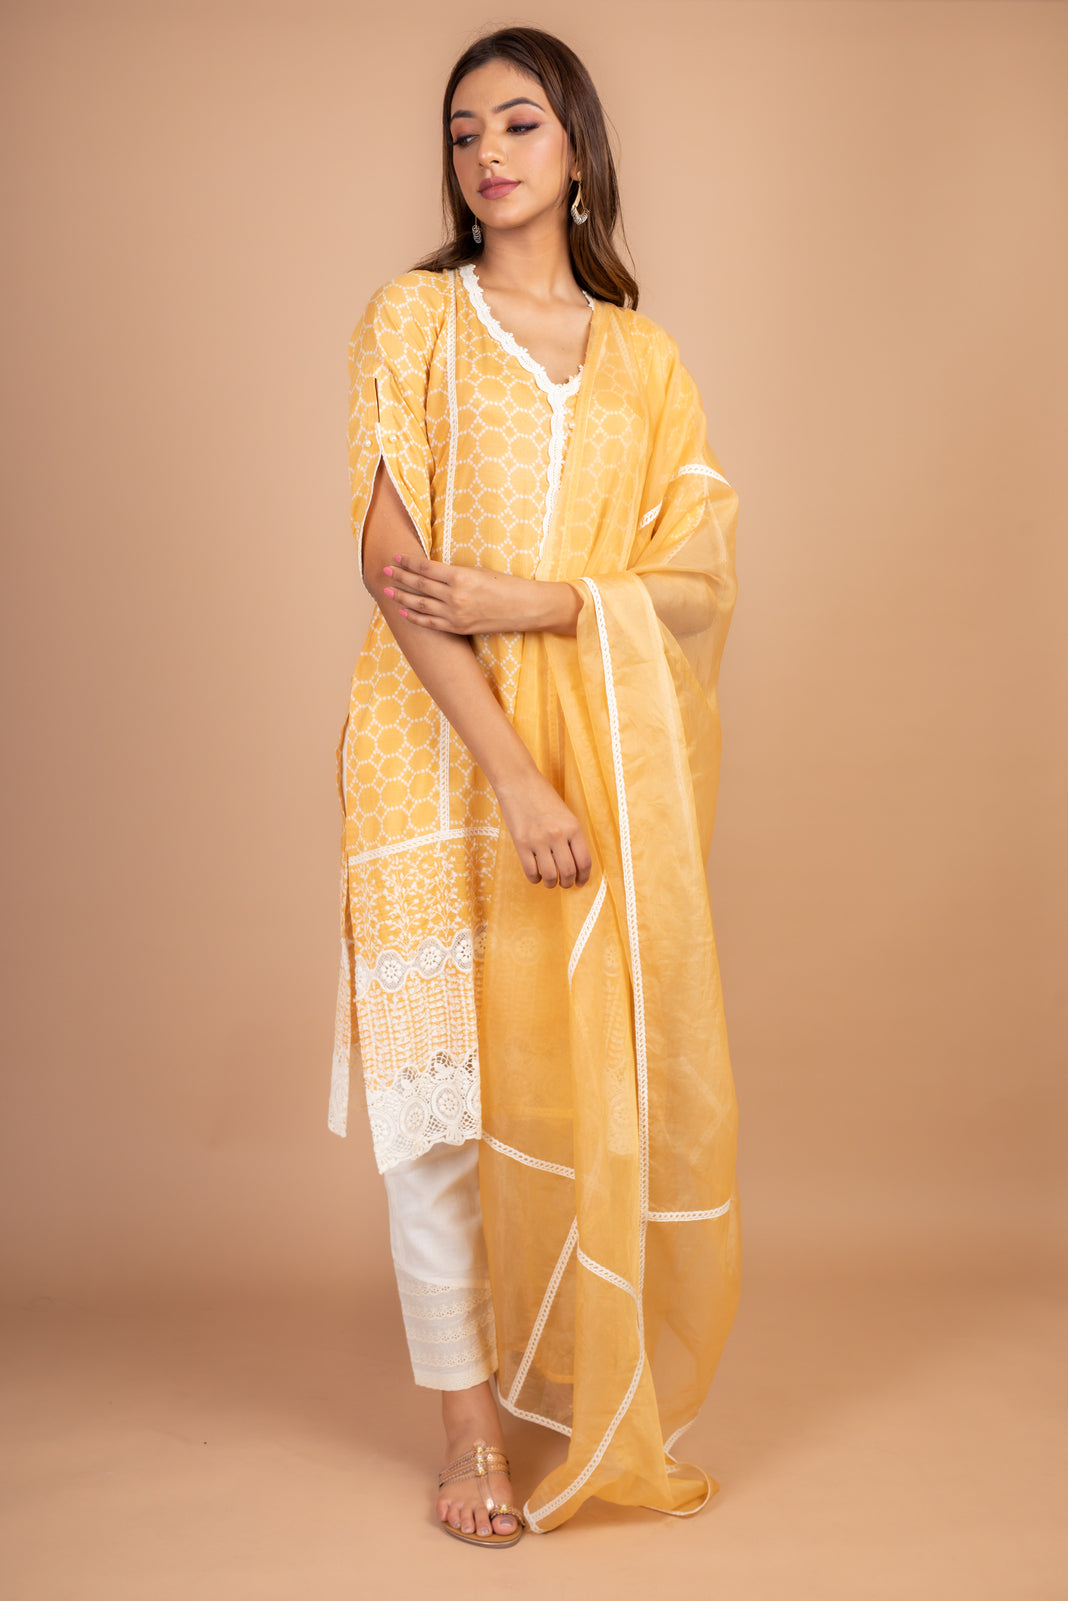 Jaina - Adaara pastel Yellow Suit Set with crochet detailing - Adaara